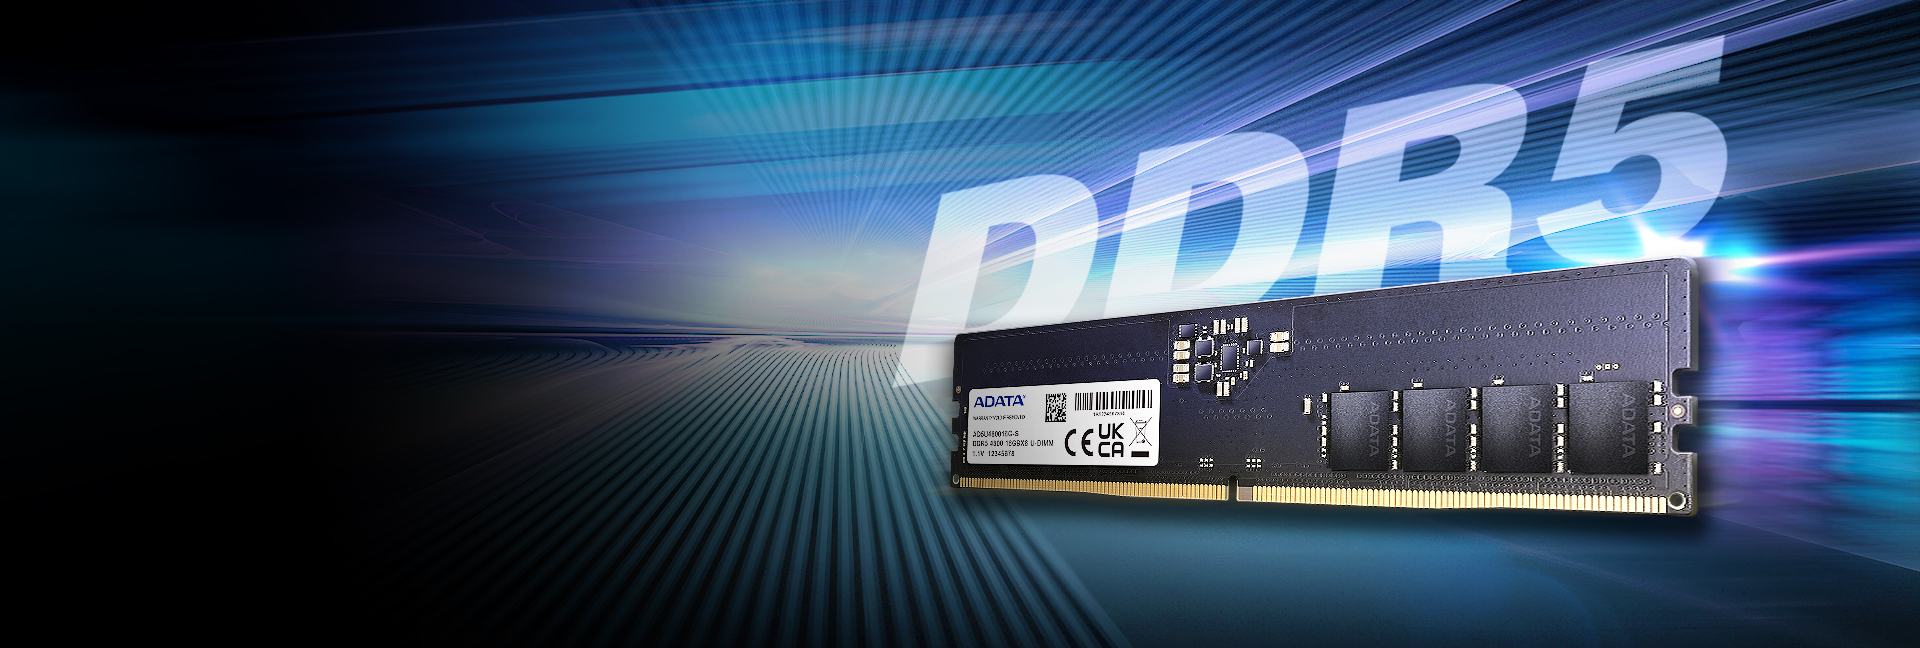 Adata DDR5 memory